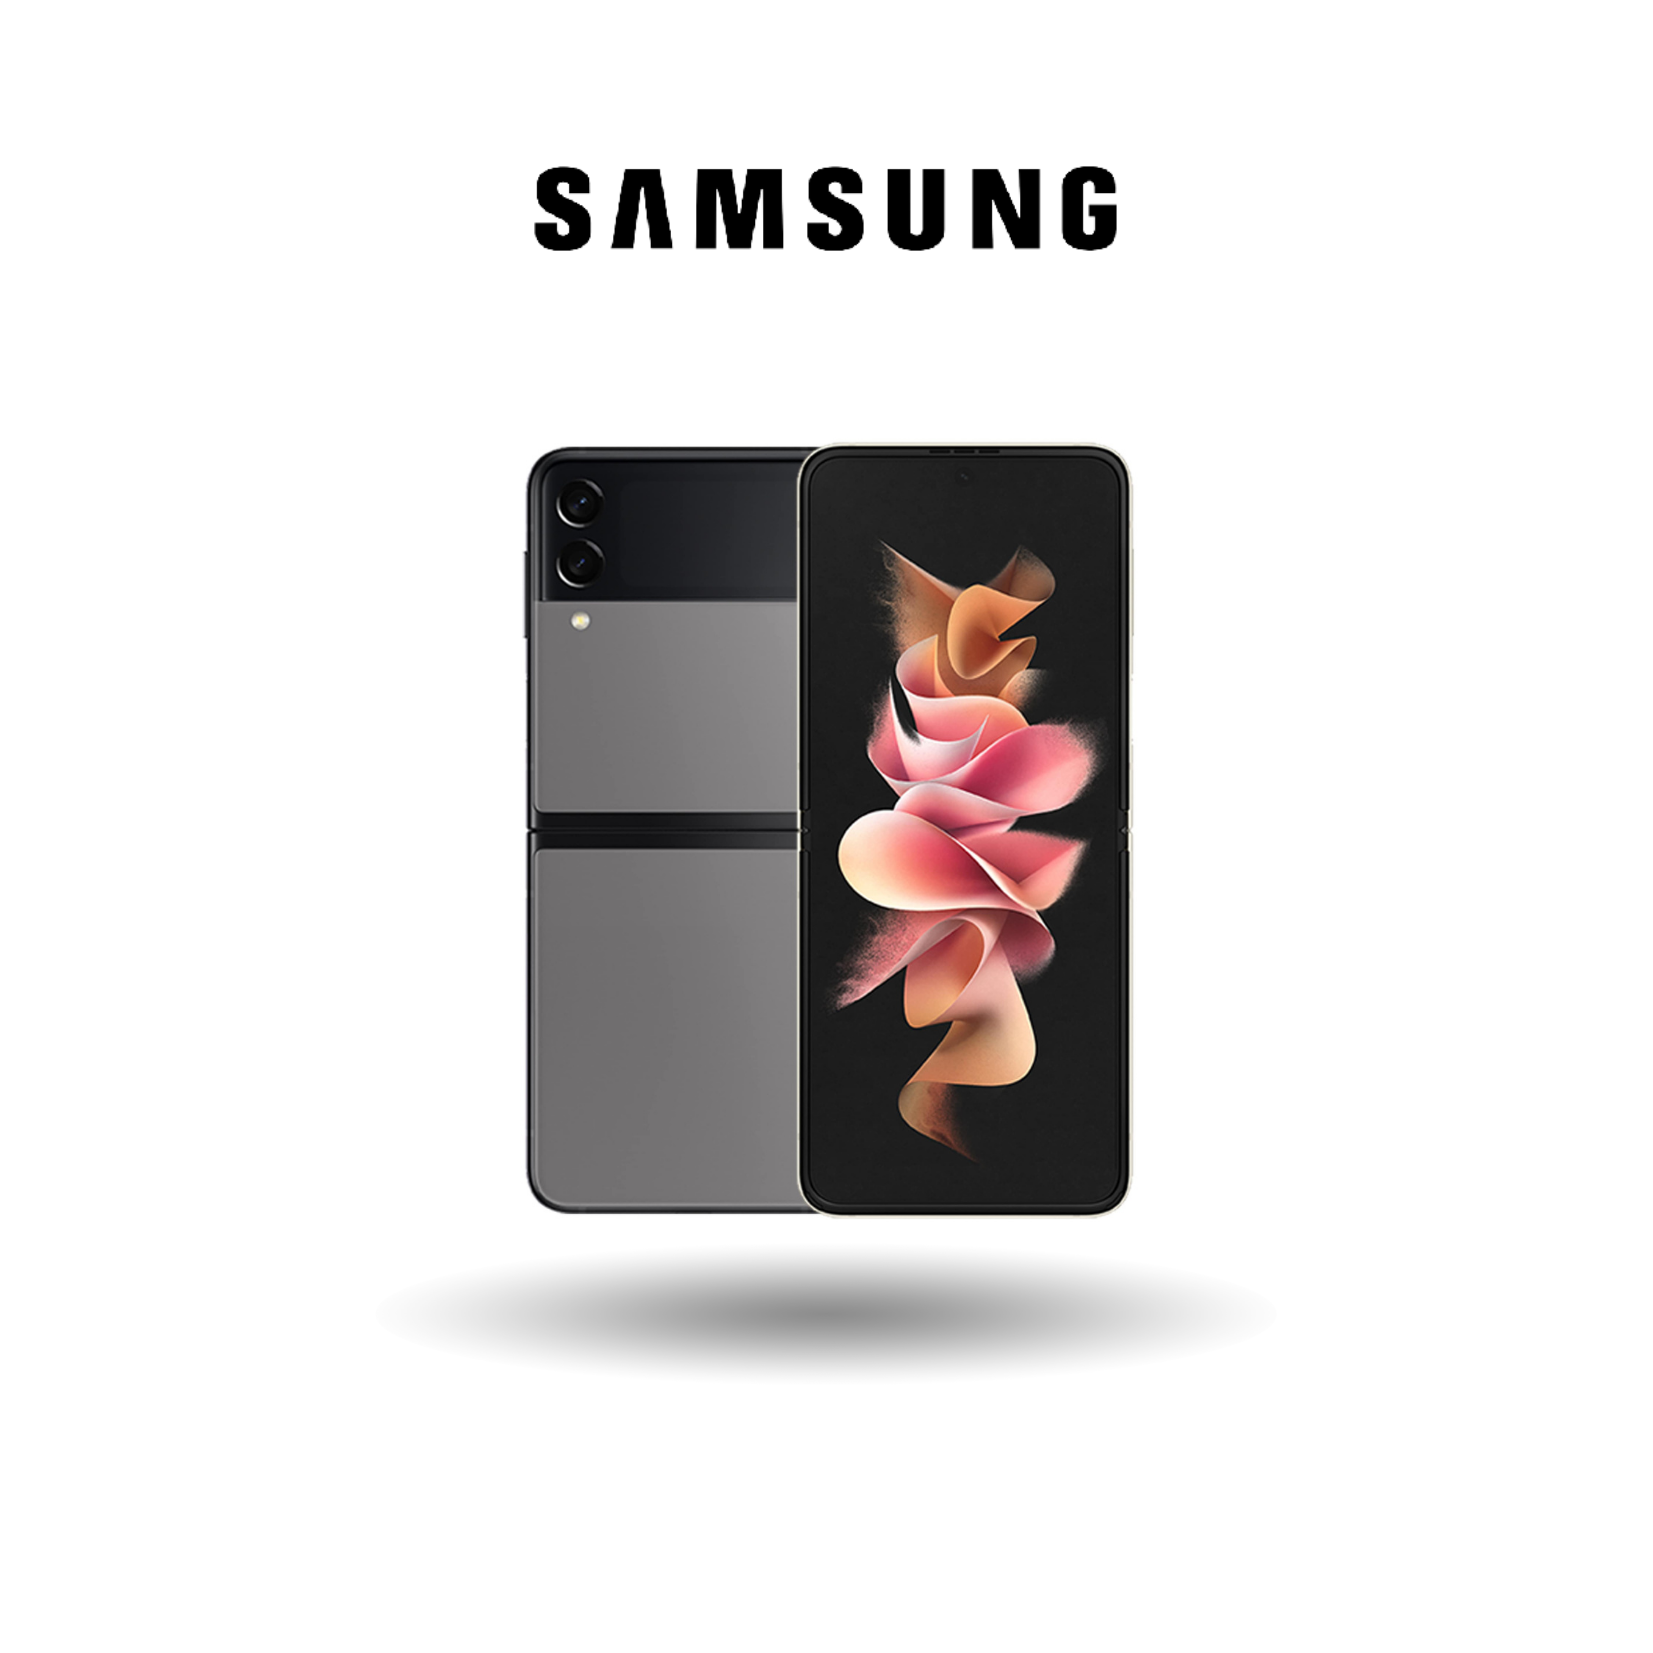 Samsung Galaxy Z Flip 3 5G - 8GB RAM + 256GB ROM  Qualcomm Snapdragon 888  IPX8 Water Resistant